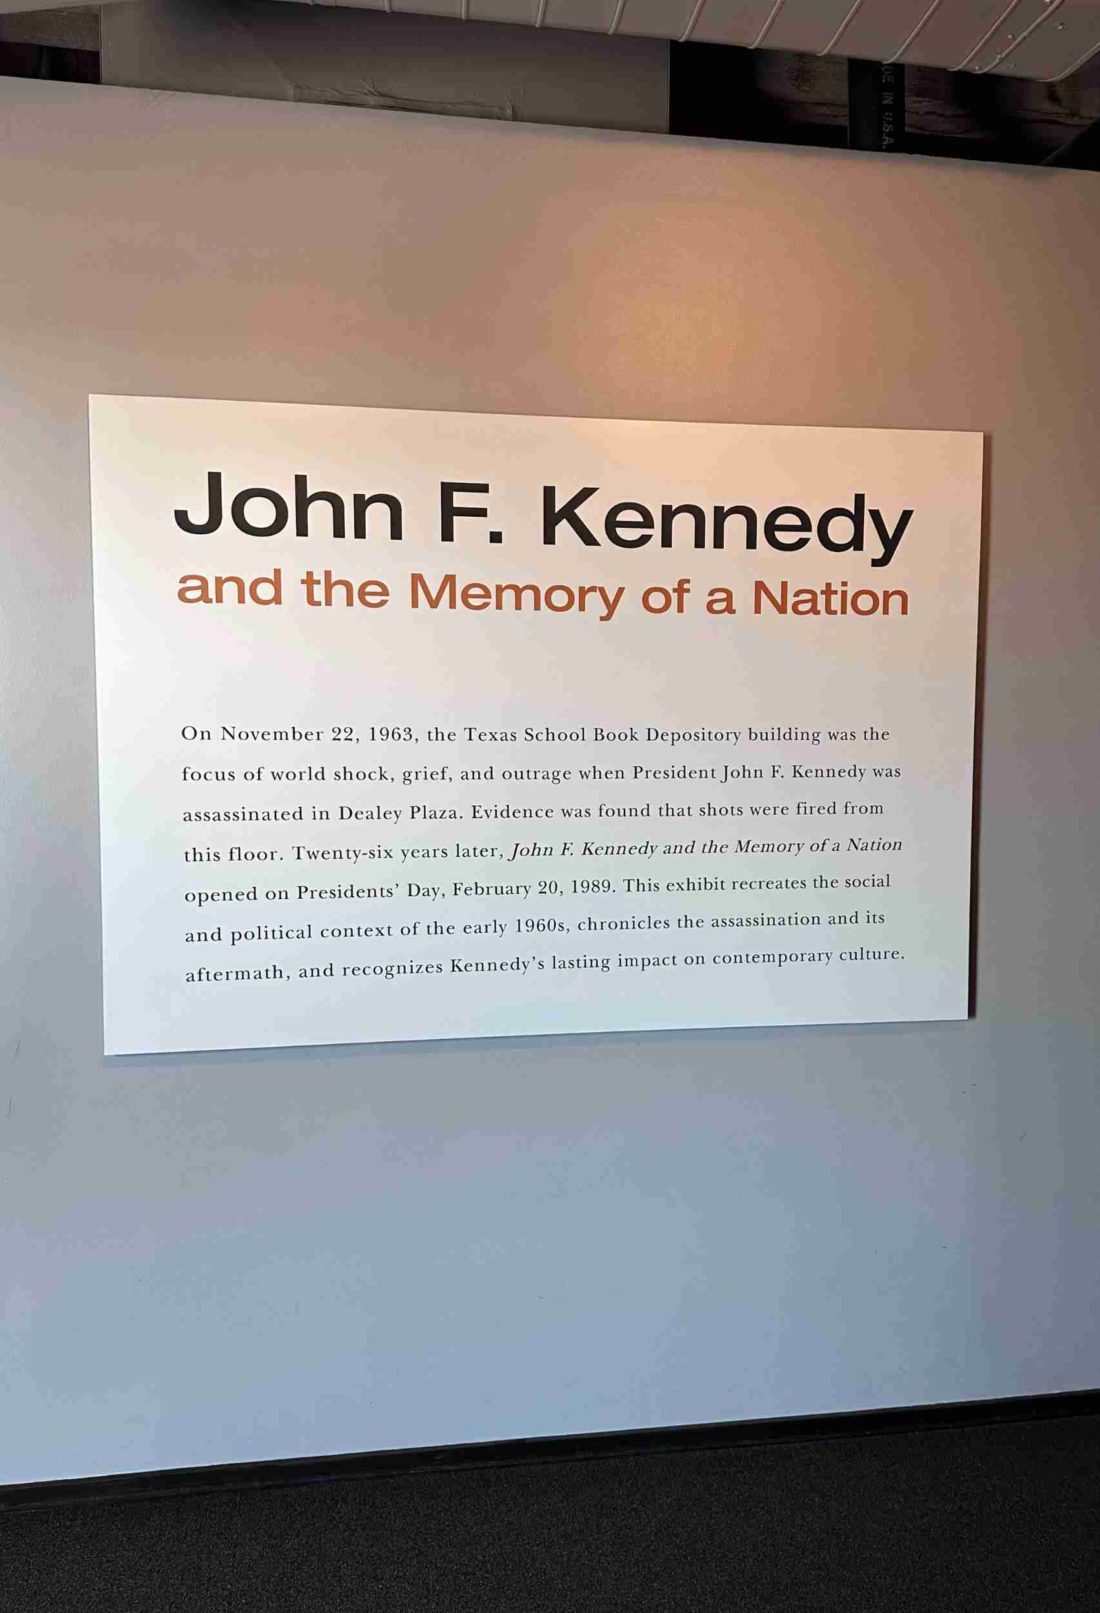 JFK memory of a nation